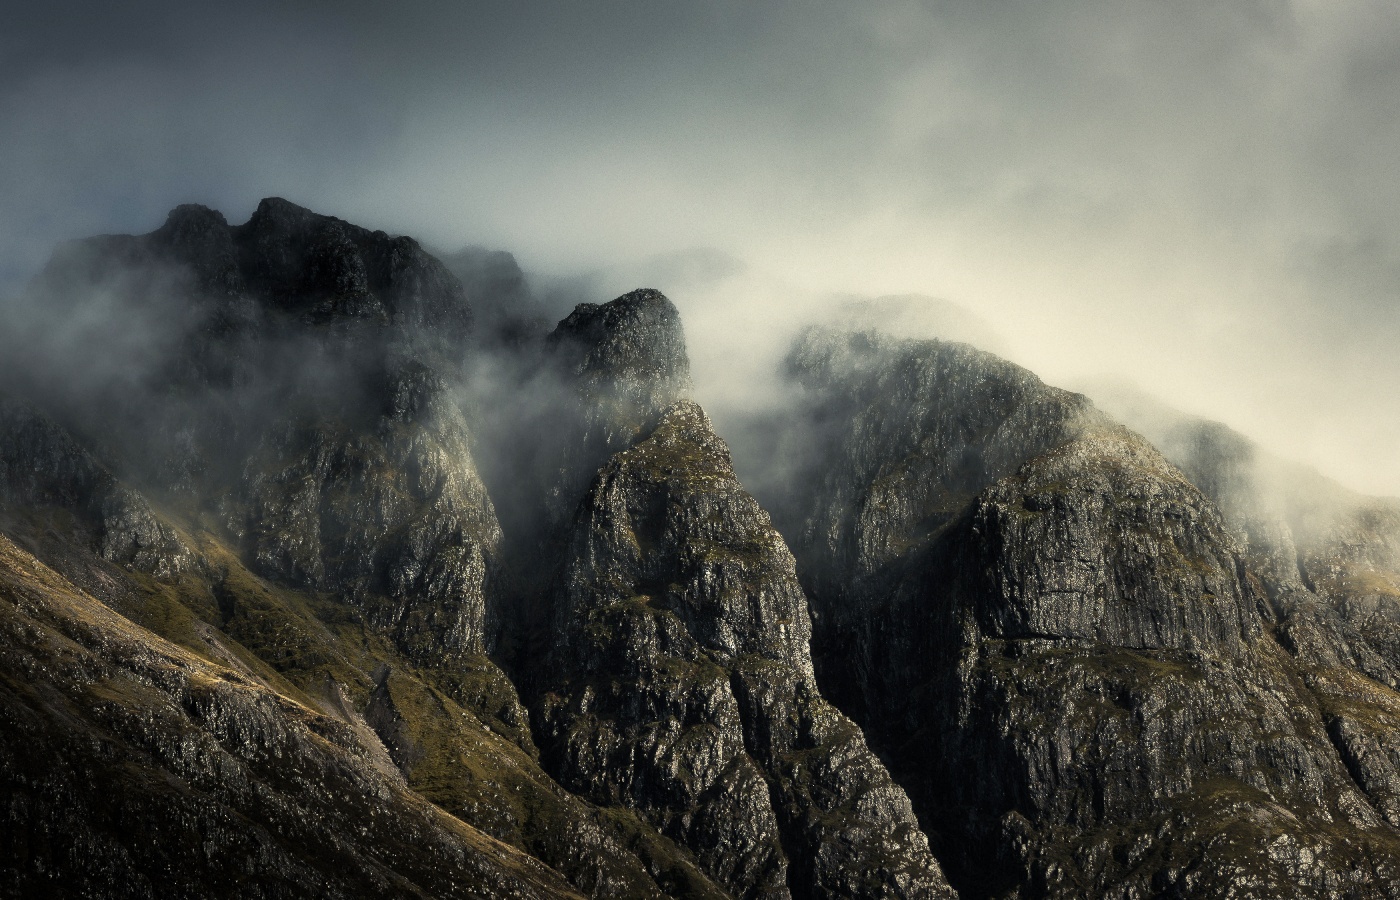 The rugged treacherous mist covered ridges, gullies and peaks of the Aonach Eagach Ridge.